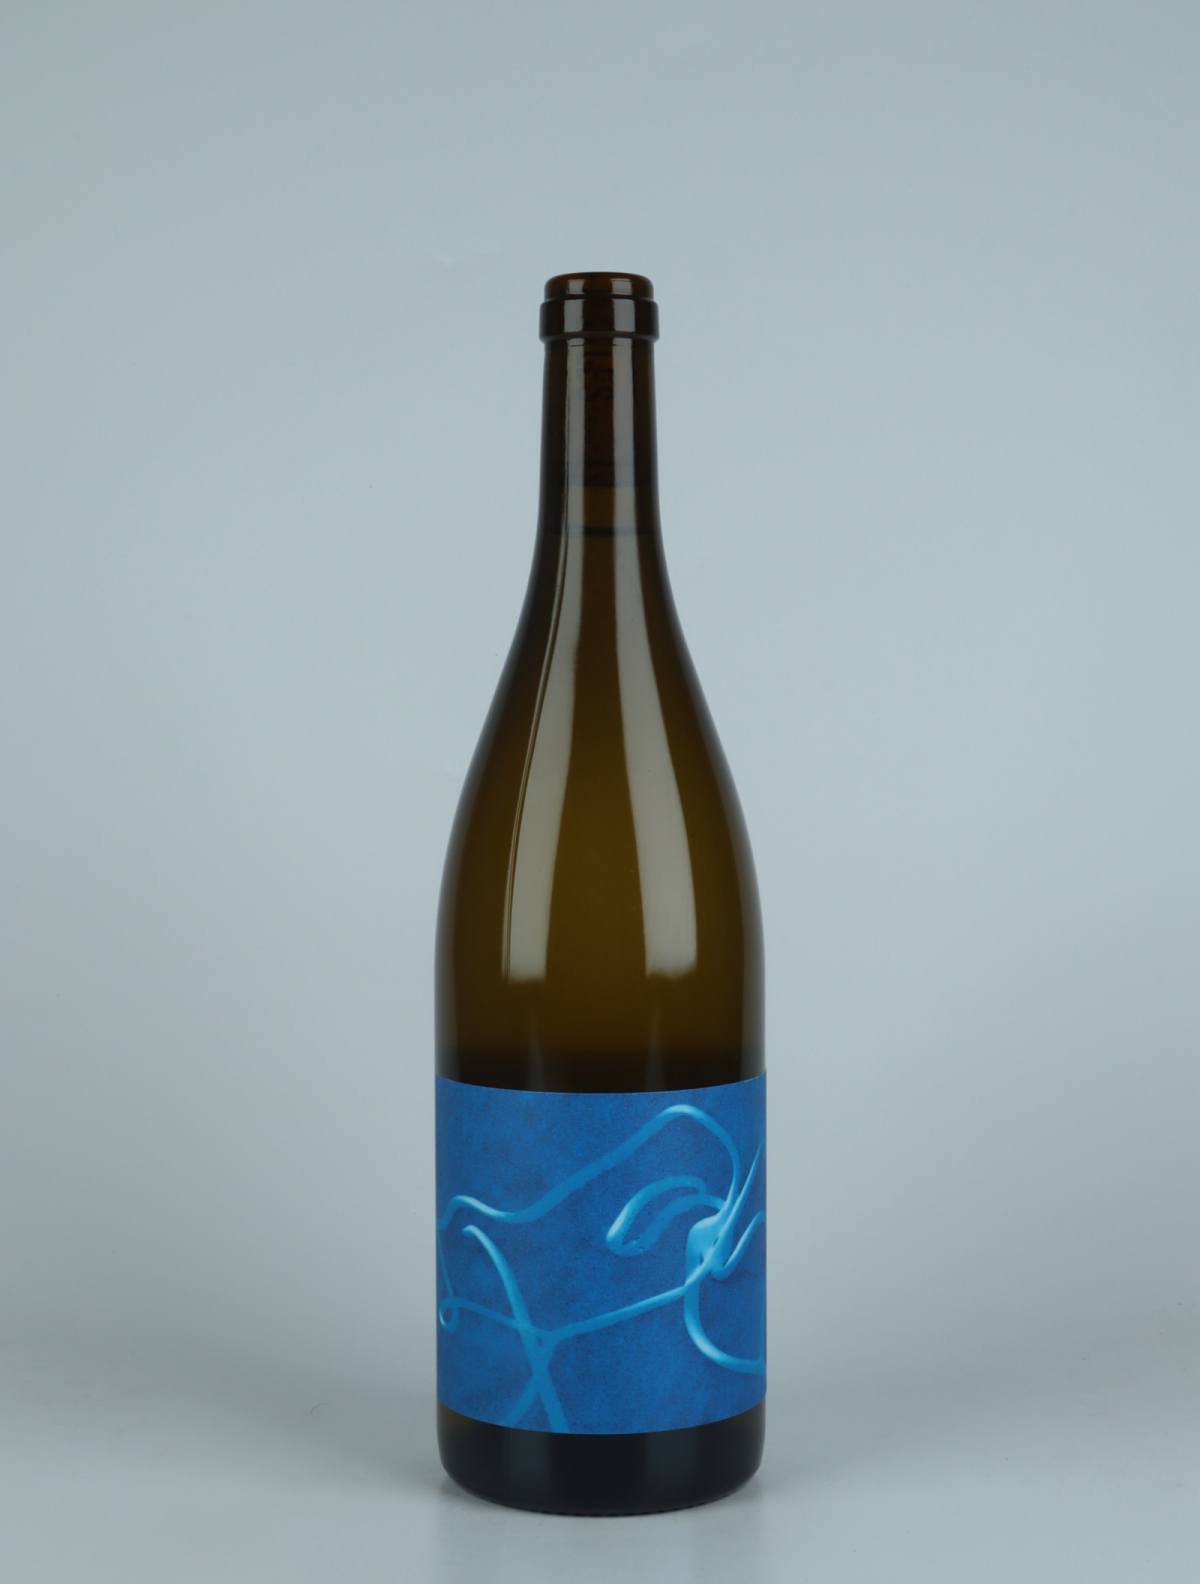 A bottle 2022 Les Vrilles White wine from Thomas Puéchavy, Loire in France